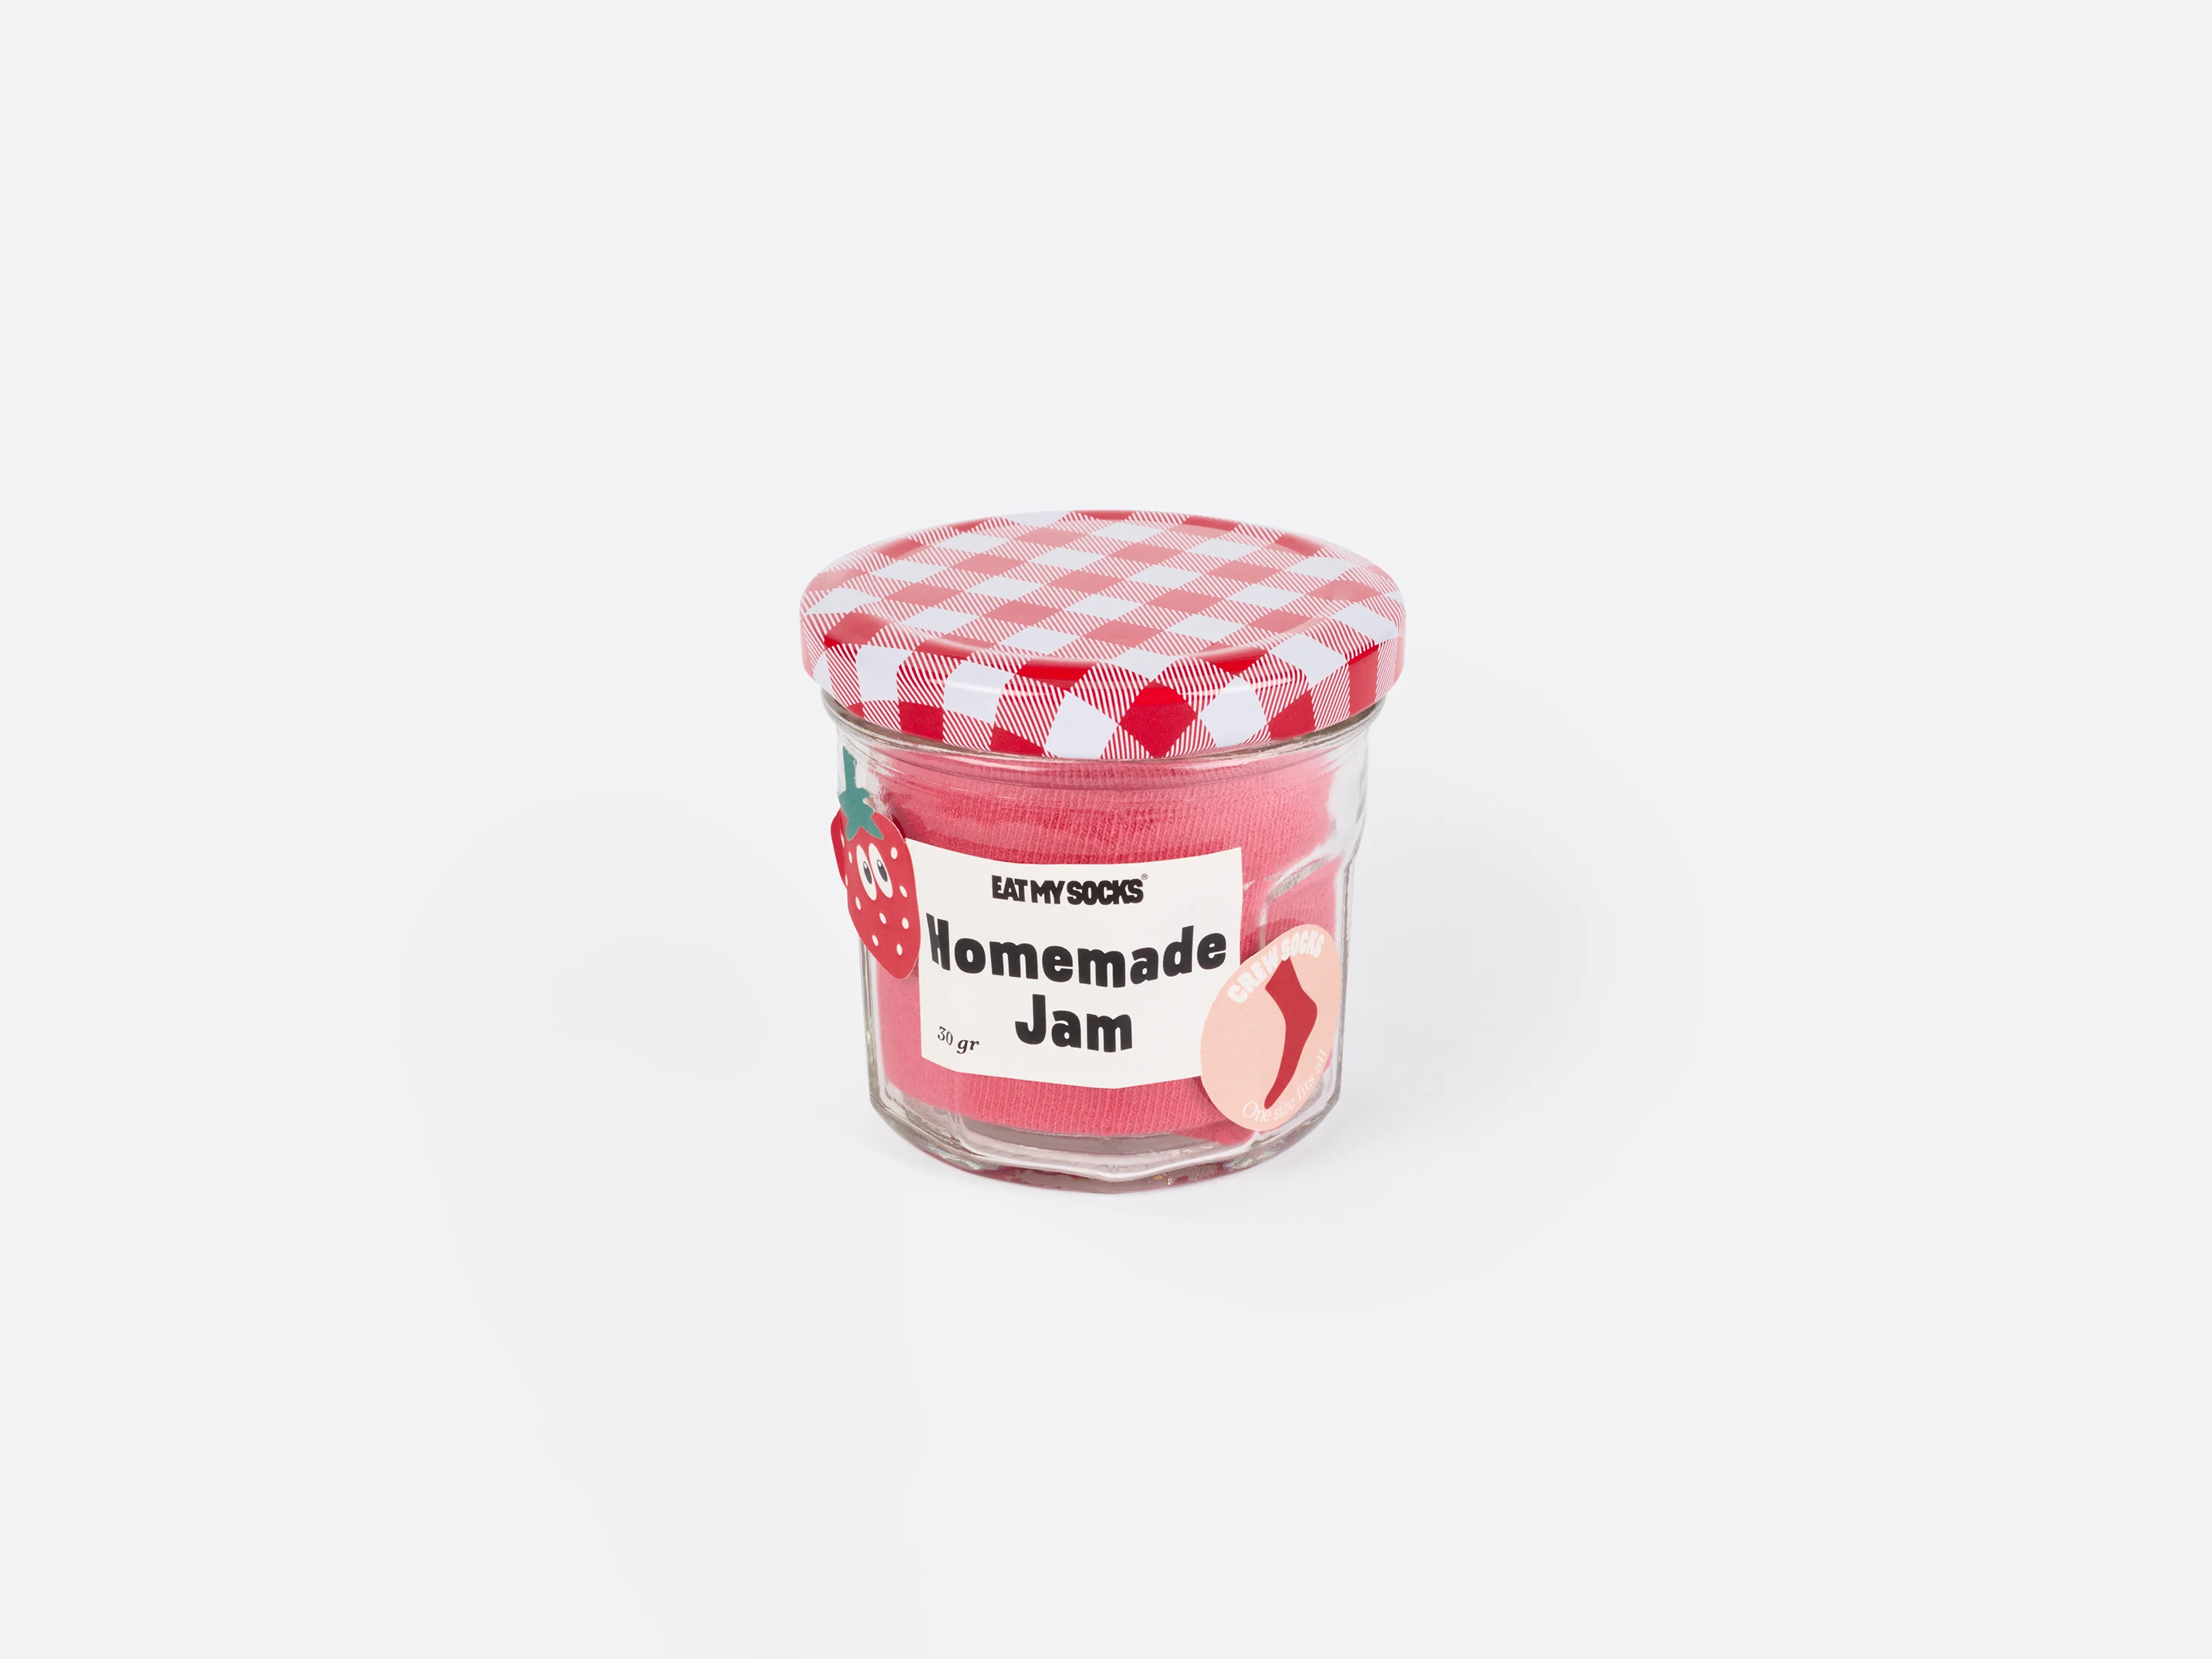 Eat My Socks - Homemade Jam (Strawberry) - One size